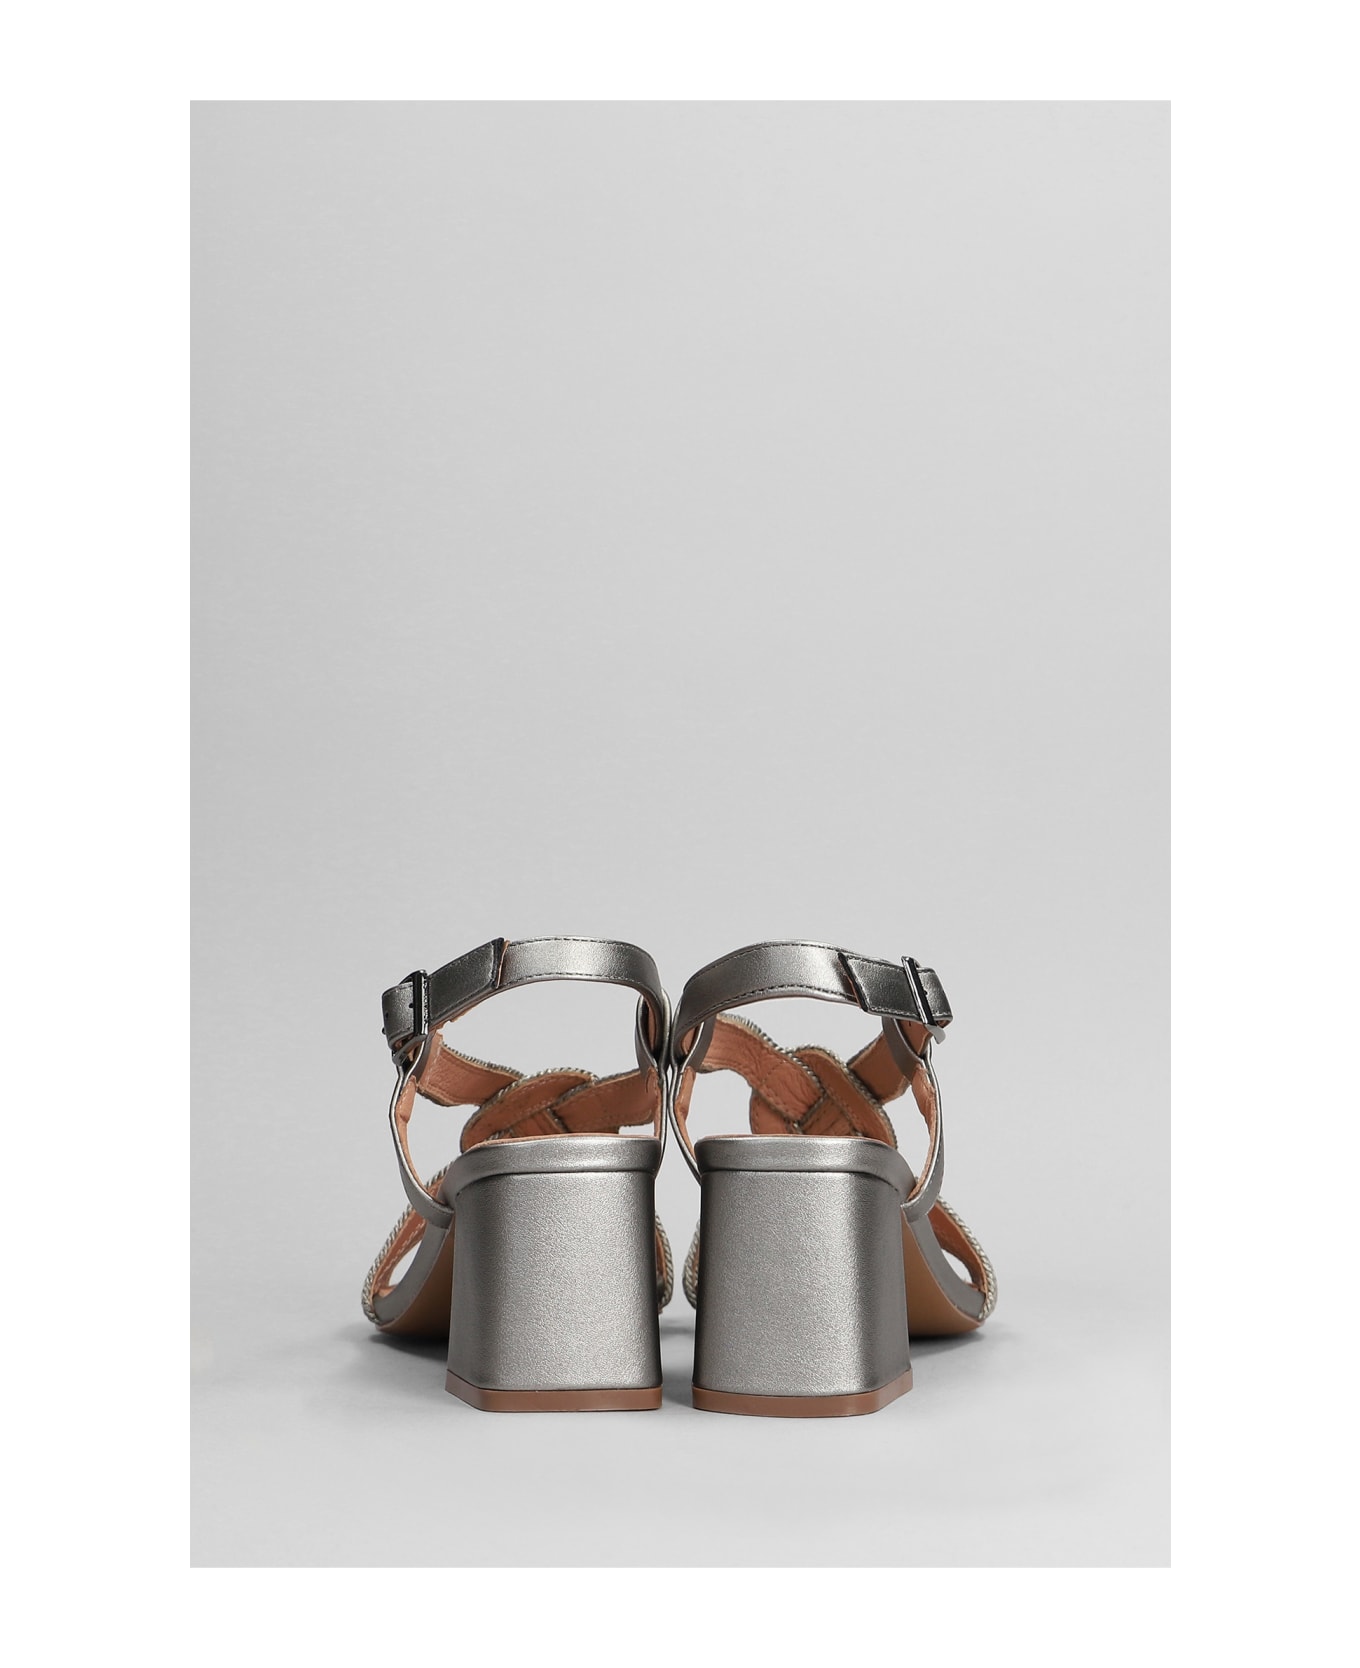 Bibi Lou Setsuko Sandals In Gunmetal Leather - Gunmetal